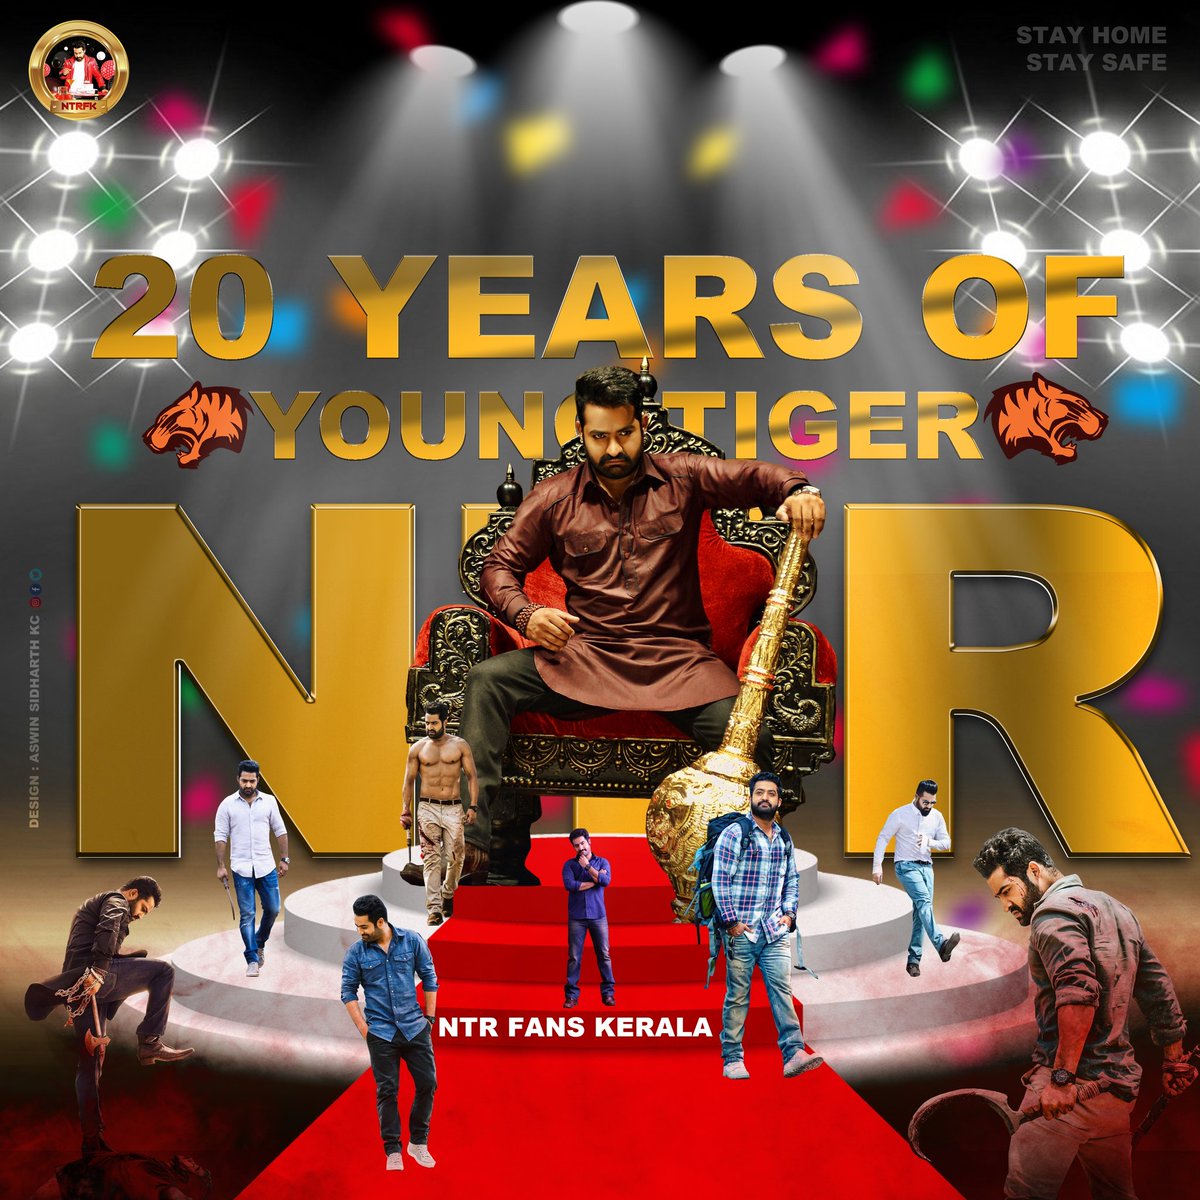 Here is the CDP by jr NTR fans kerala to celebrate 20 years of jr NTR
@tarak9999 @ntrfk_kerala @ntrfanskrala
Editz - @AswinSidharthkc ❤️
#20YearsOfNTRCDP 
#KomaramBheemNTR 
#20YearsOfNTRTrendOnNov15 
#20YearsOfNTRTrendOnNov15th 
#20yearsofntr 
#jrntr
#NTR
#NTRCharitableServices